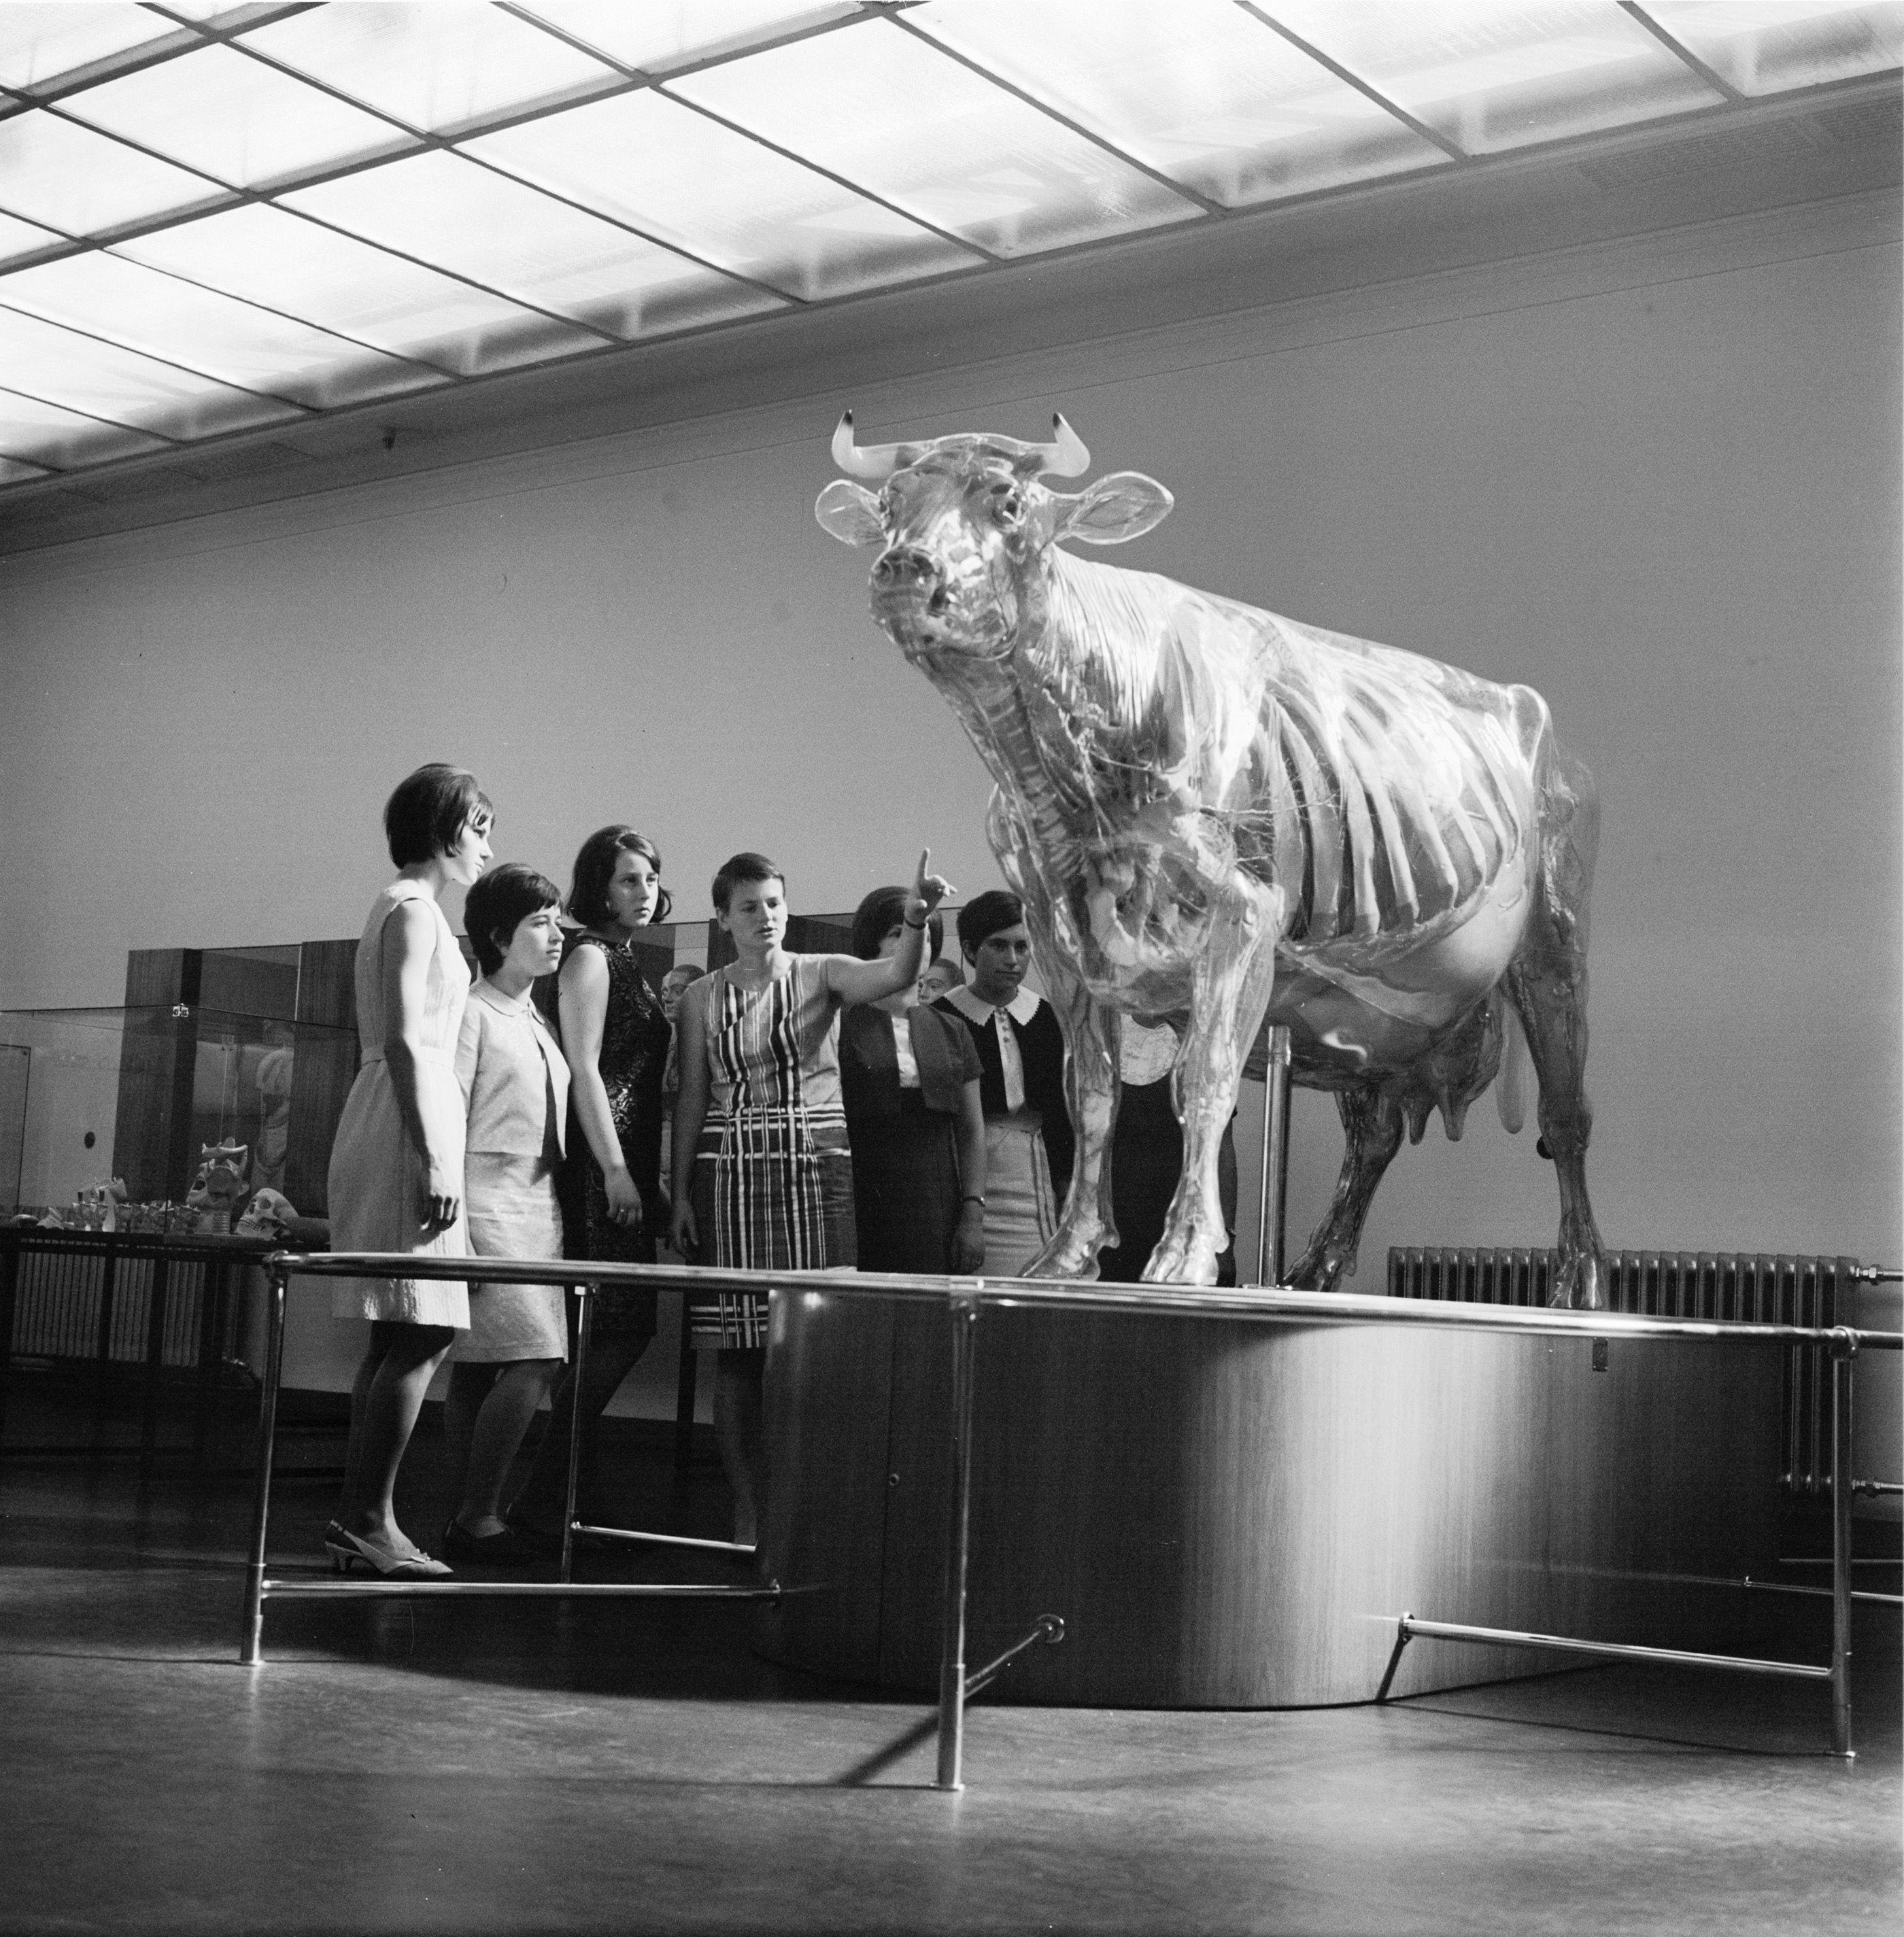  Glass Cow in the permanent exhibition of the German Hygiene Museum, 1967. Photo Richard Peter jun. Collection SLUB Dresden / Deutsche Fotothek 